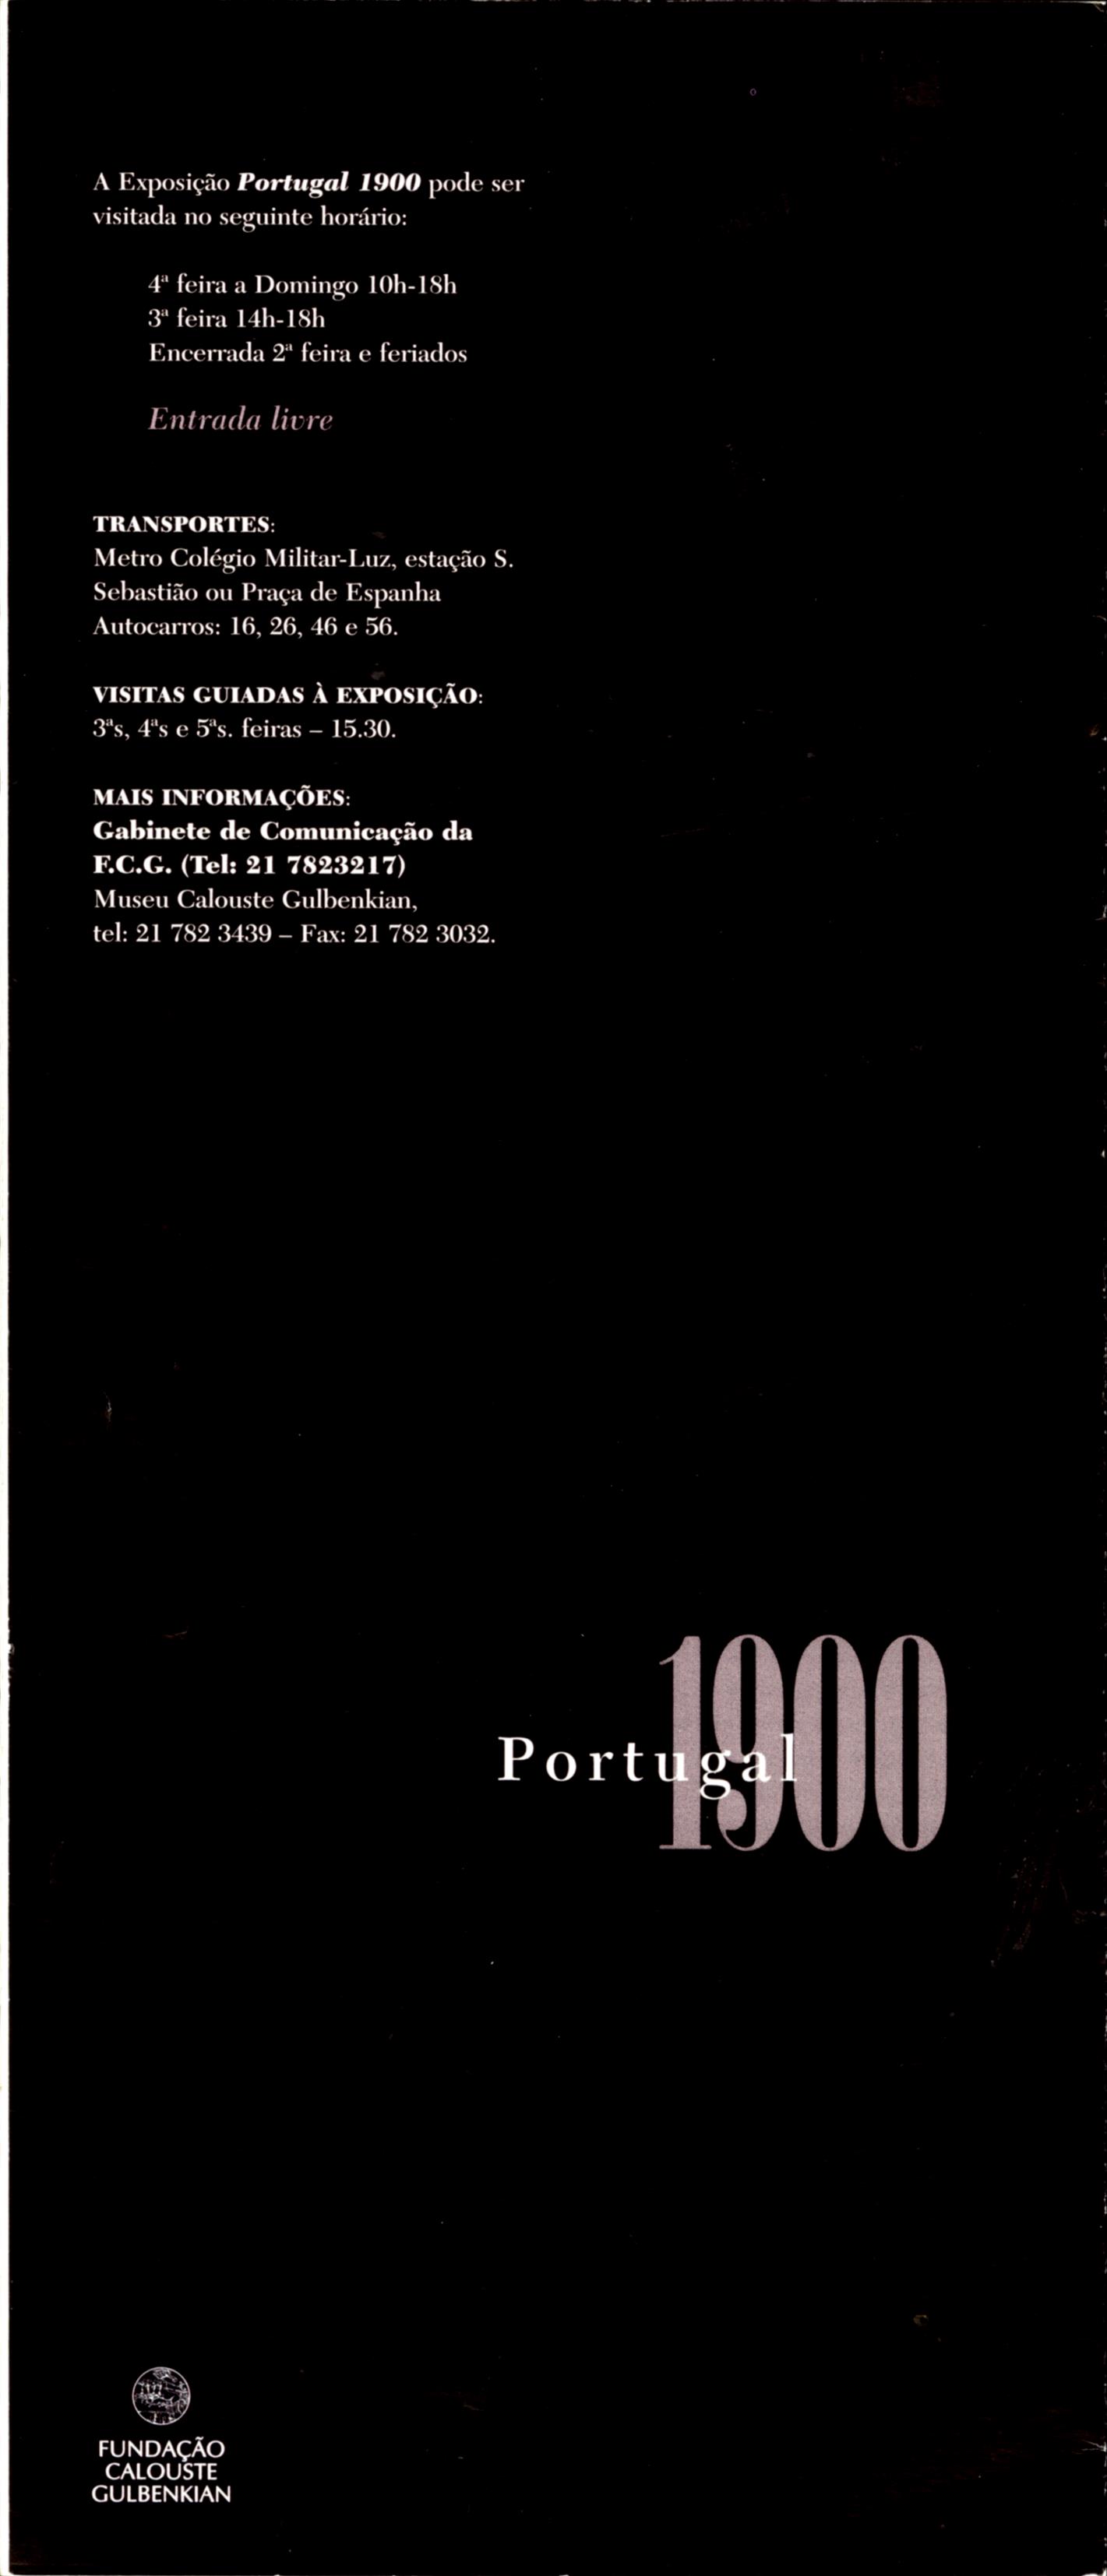 2000_Ephemera_Portugal_1900_1.5